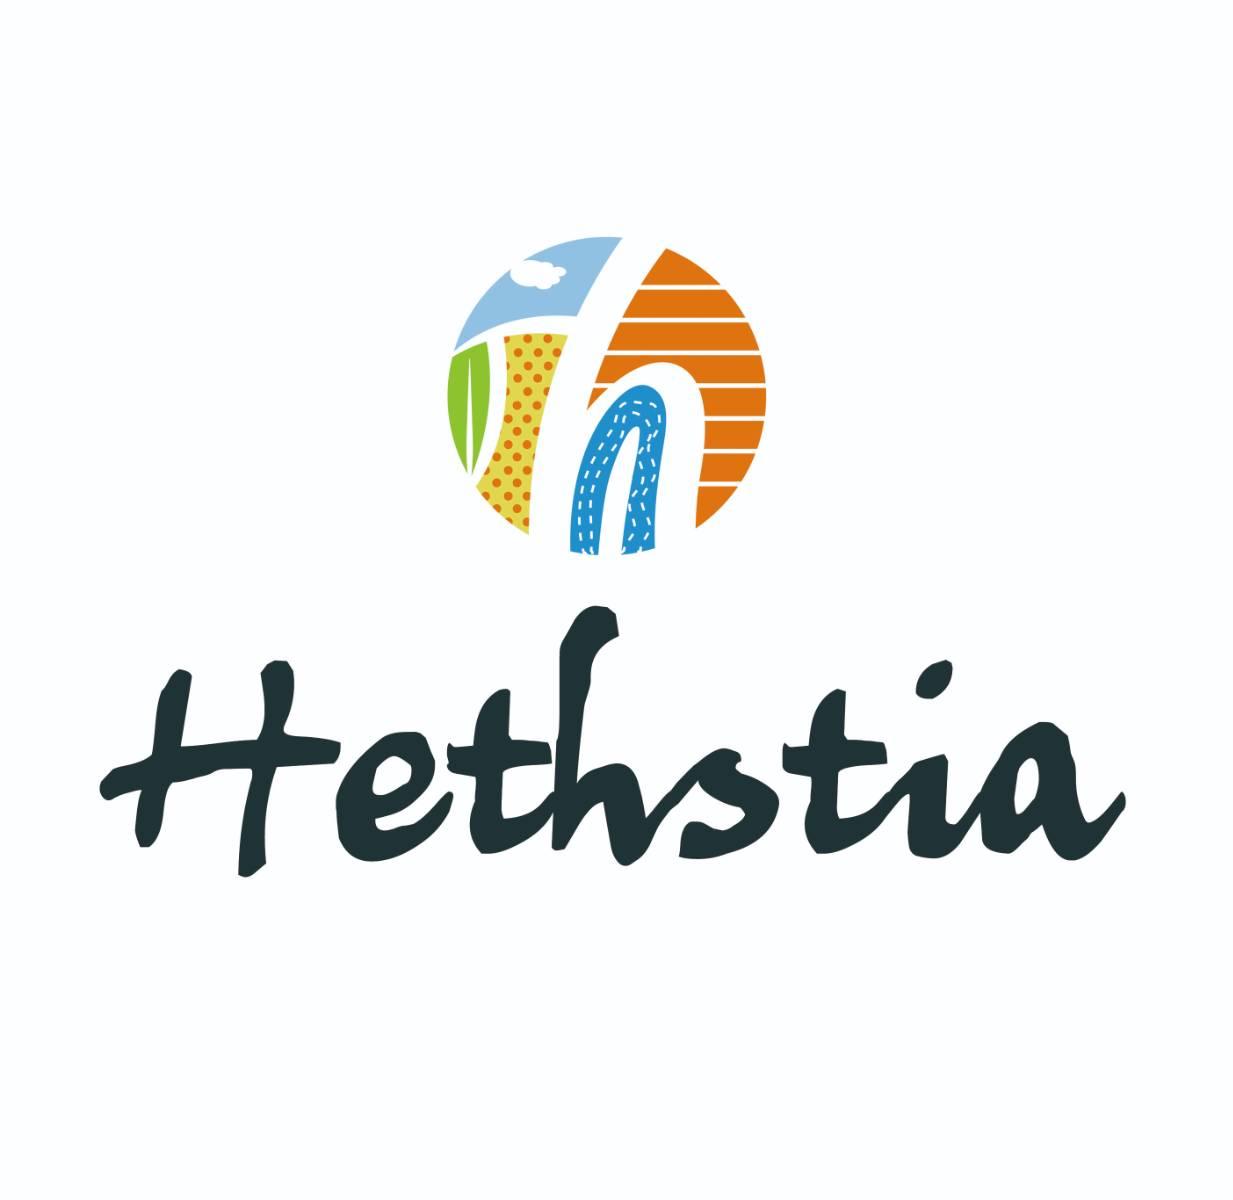 Hethstia’s brand